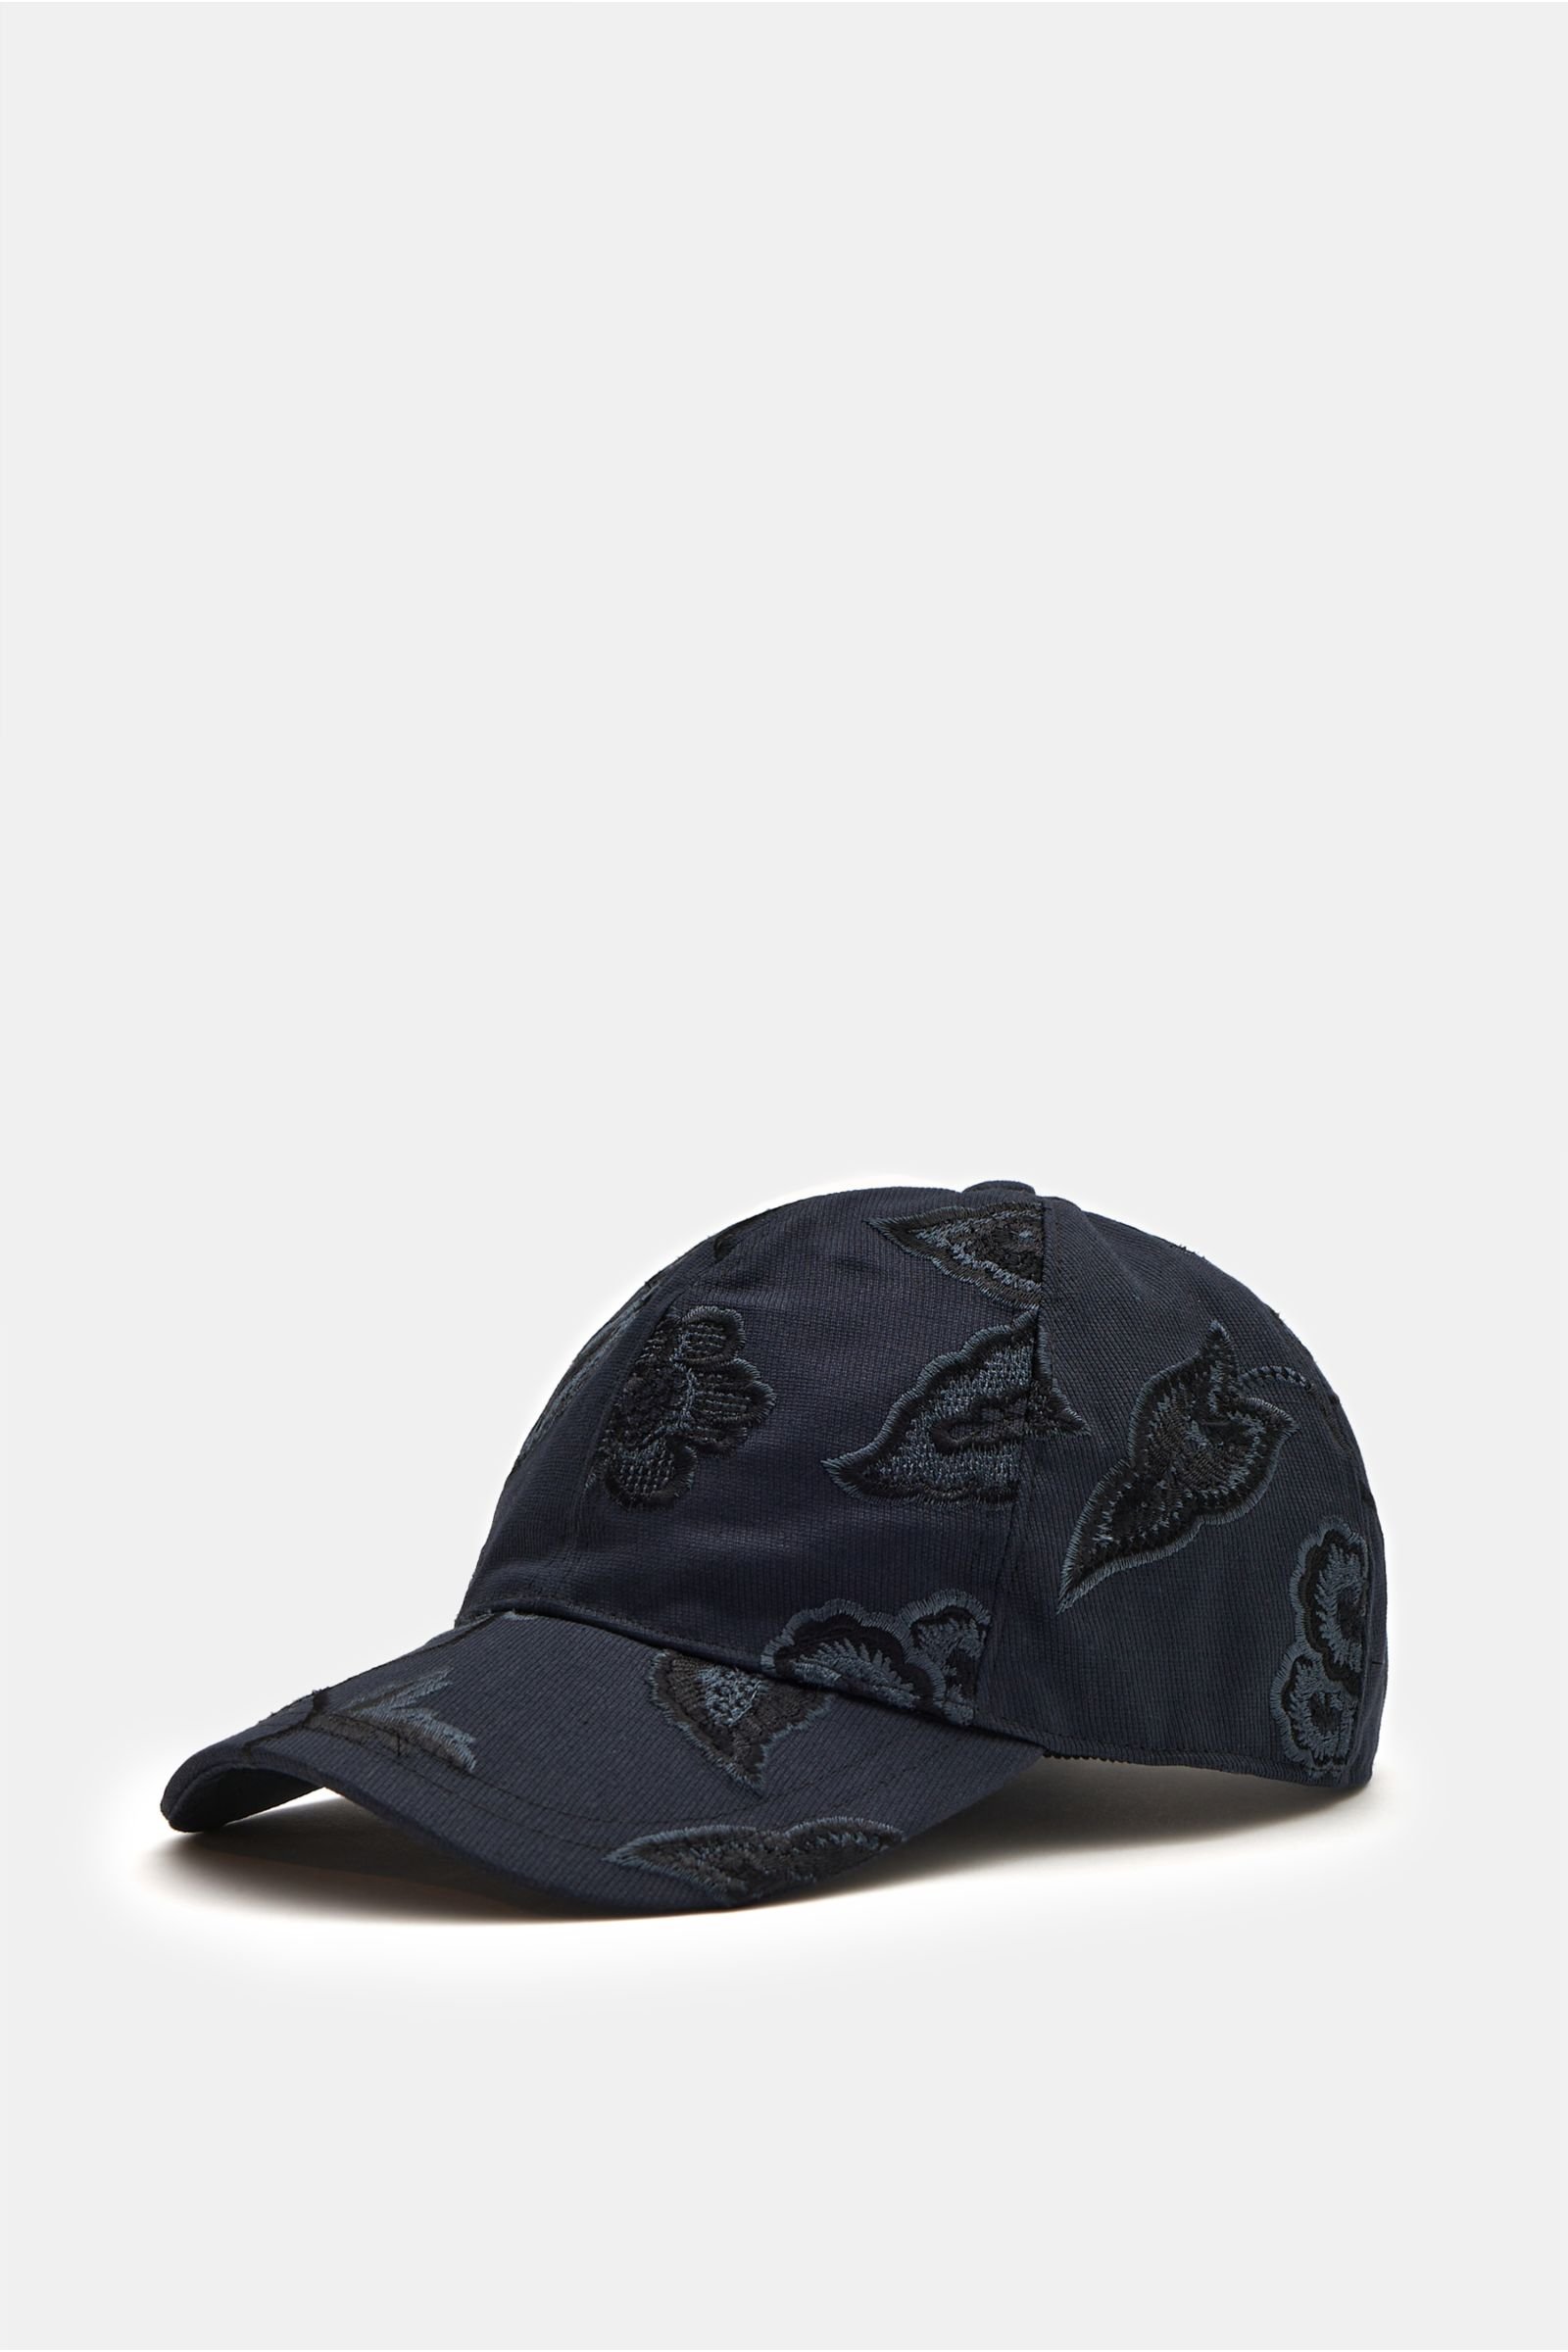 Baseball cap navy patterned